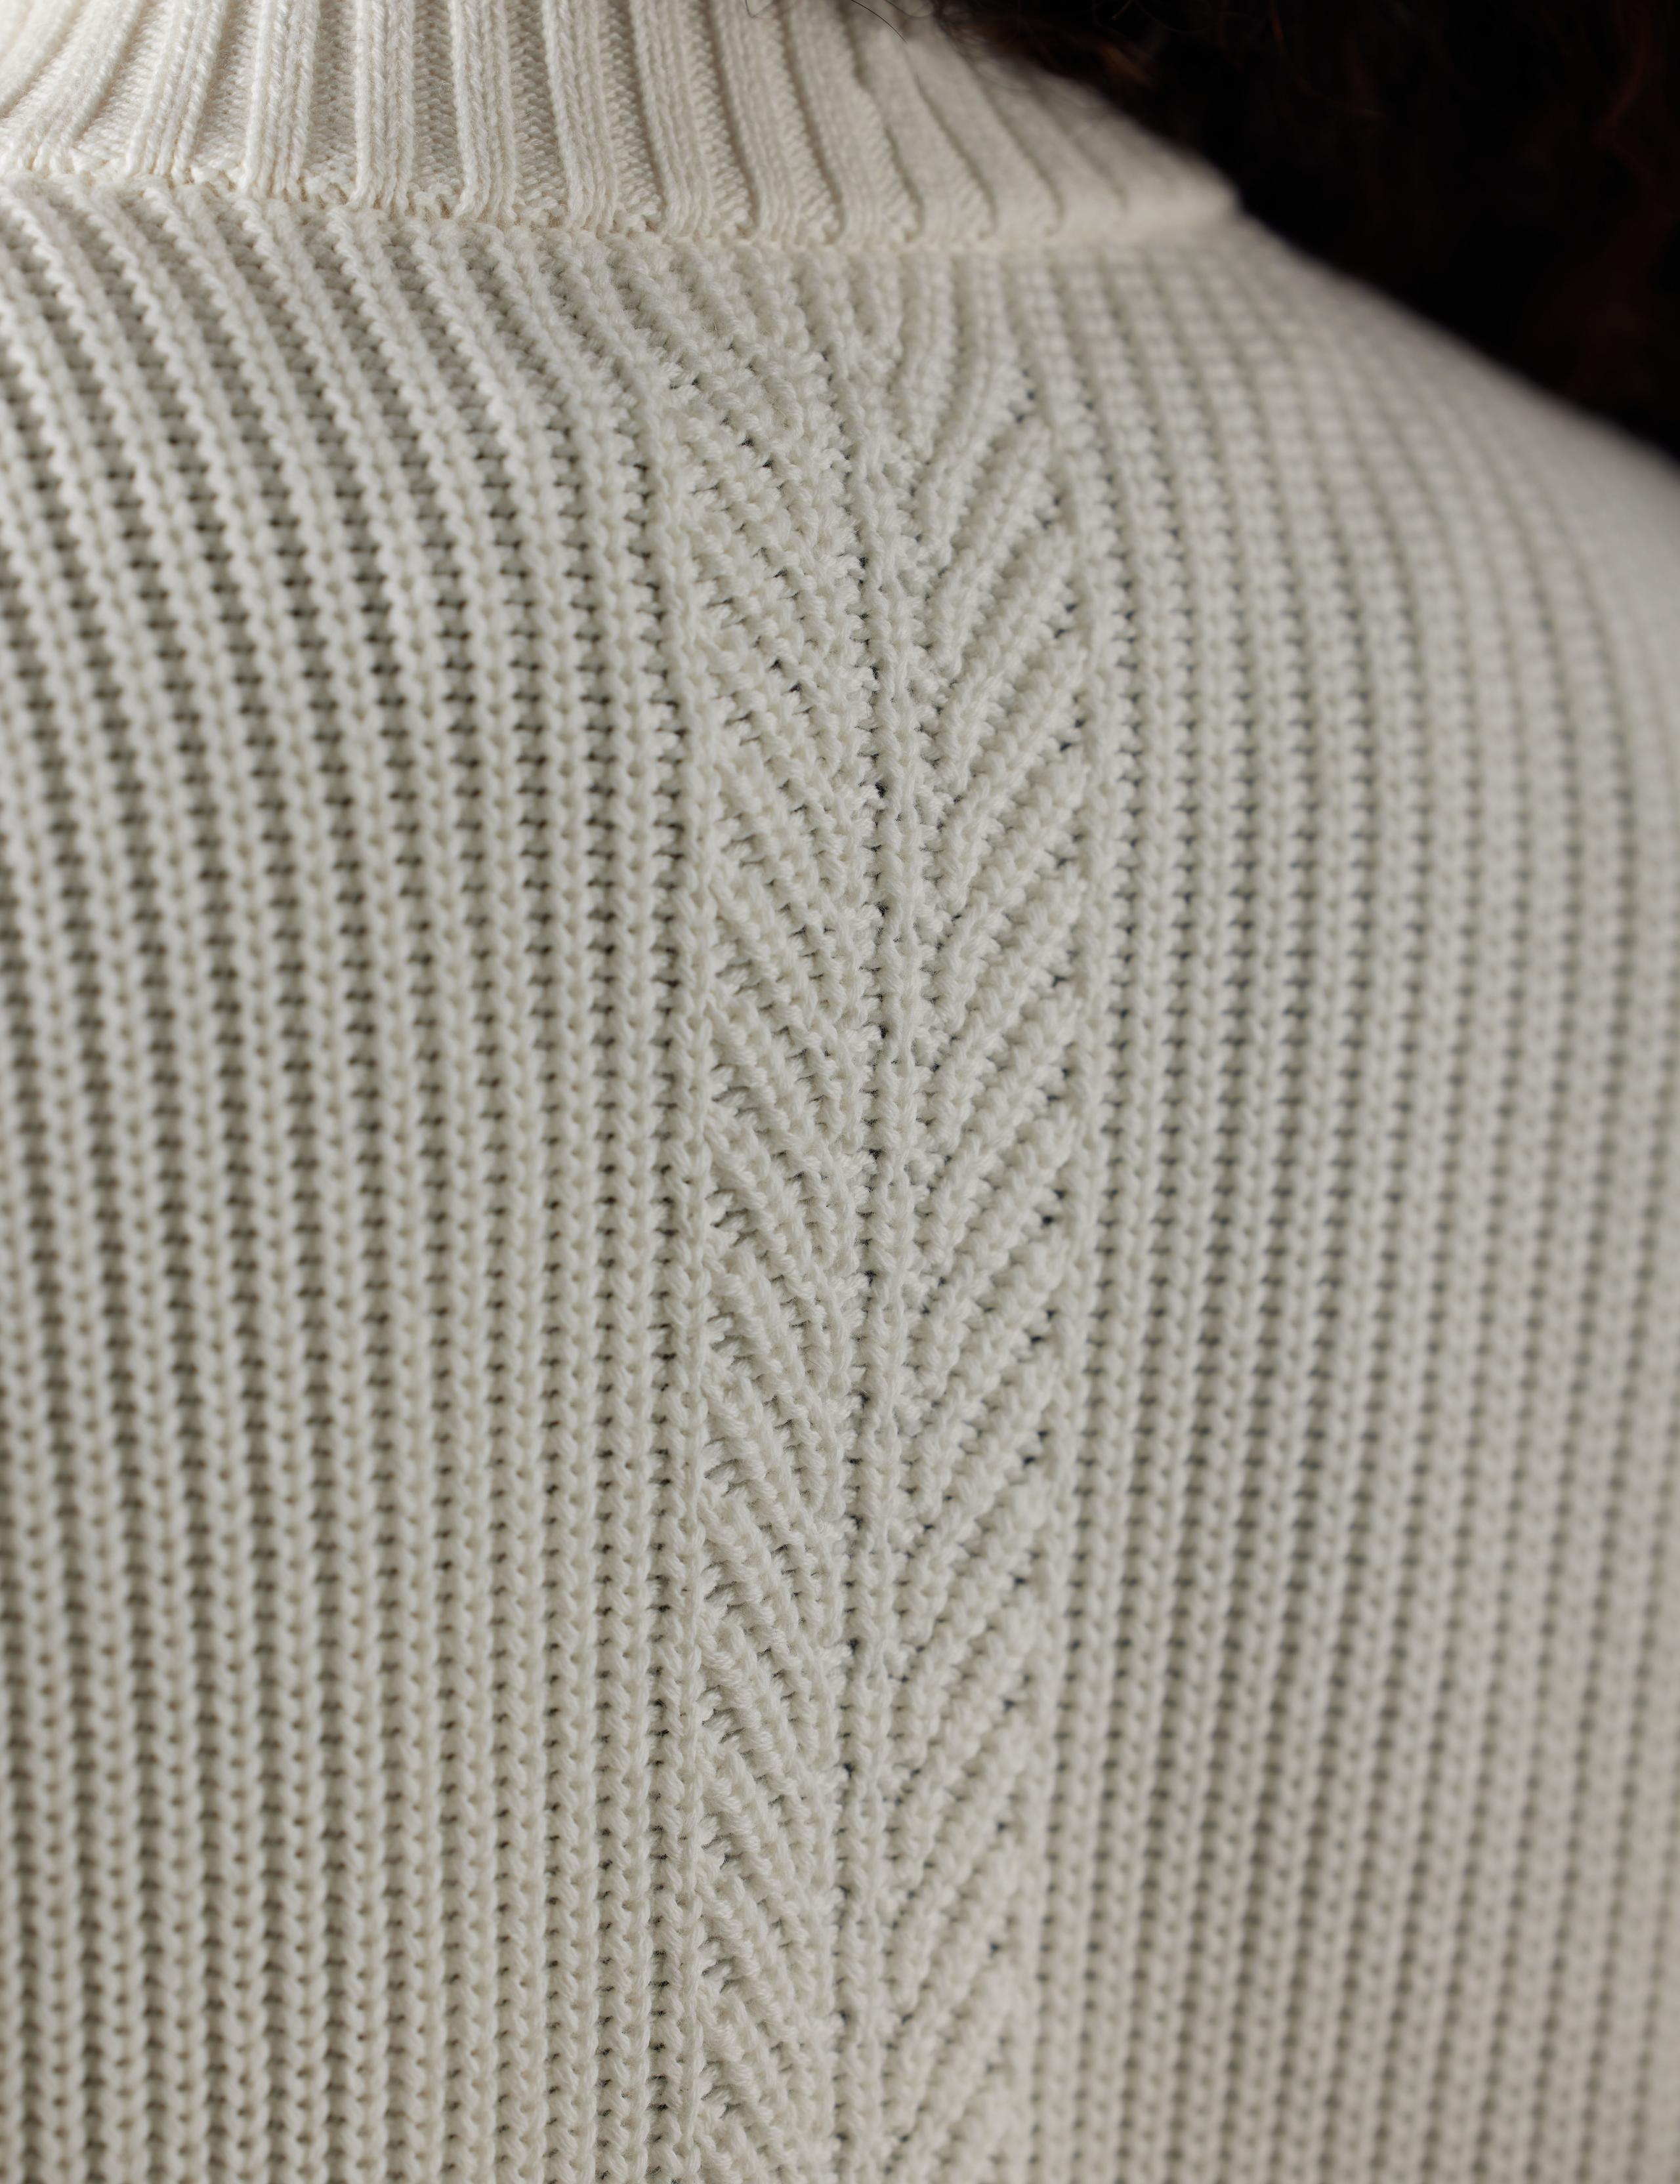 Closeup detail of sweater stitching